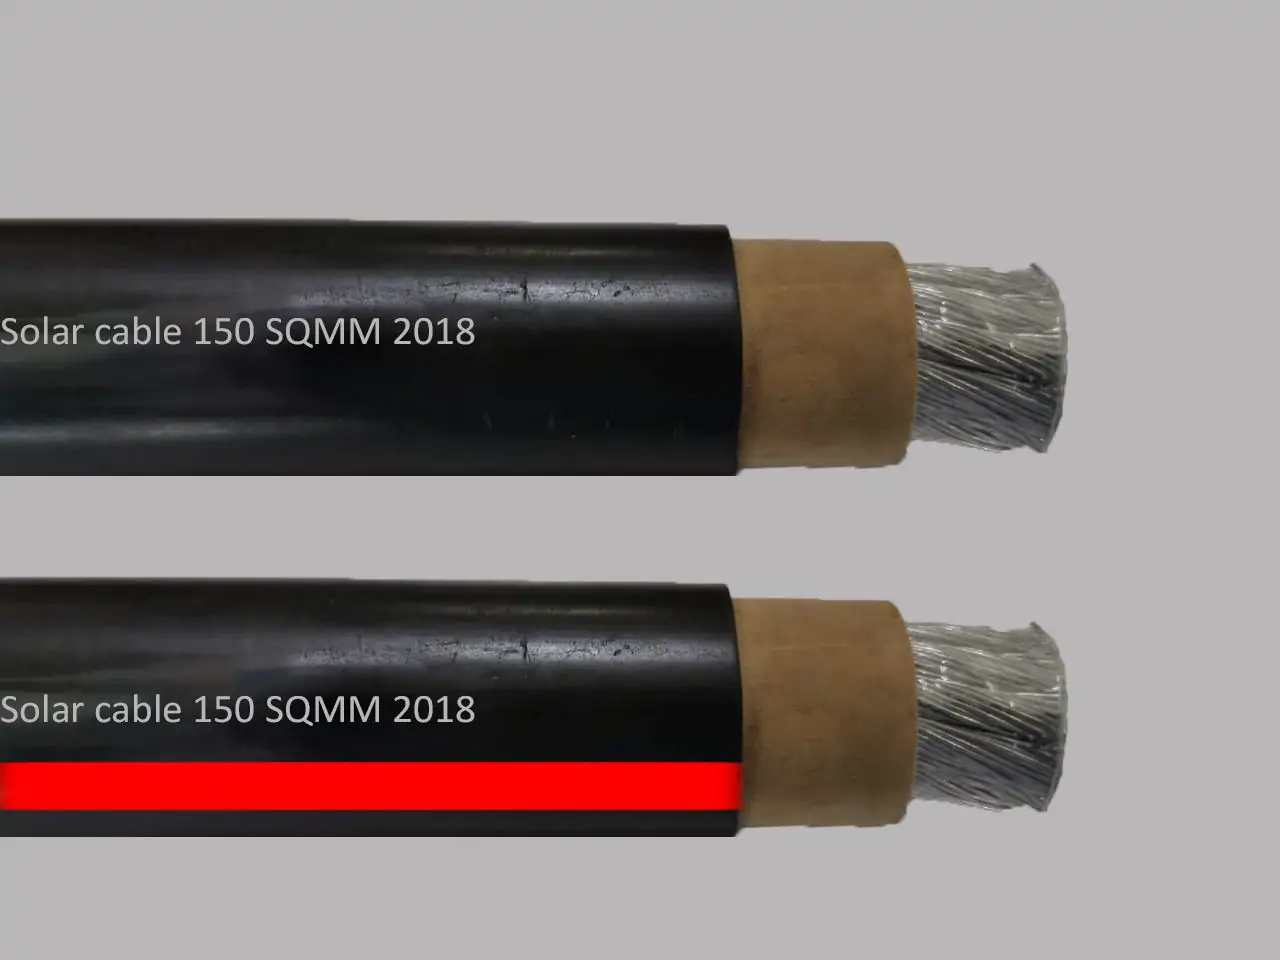 en-certified-dc-solar-cable-150sqm-500mtr-drum-red_1_1_1_1_1_1.jpg